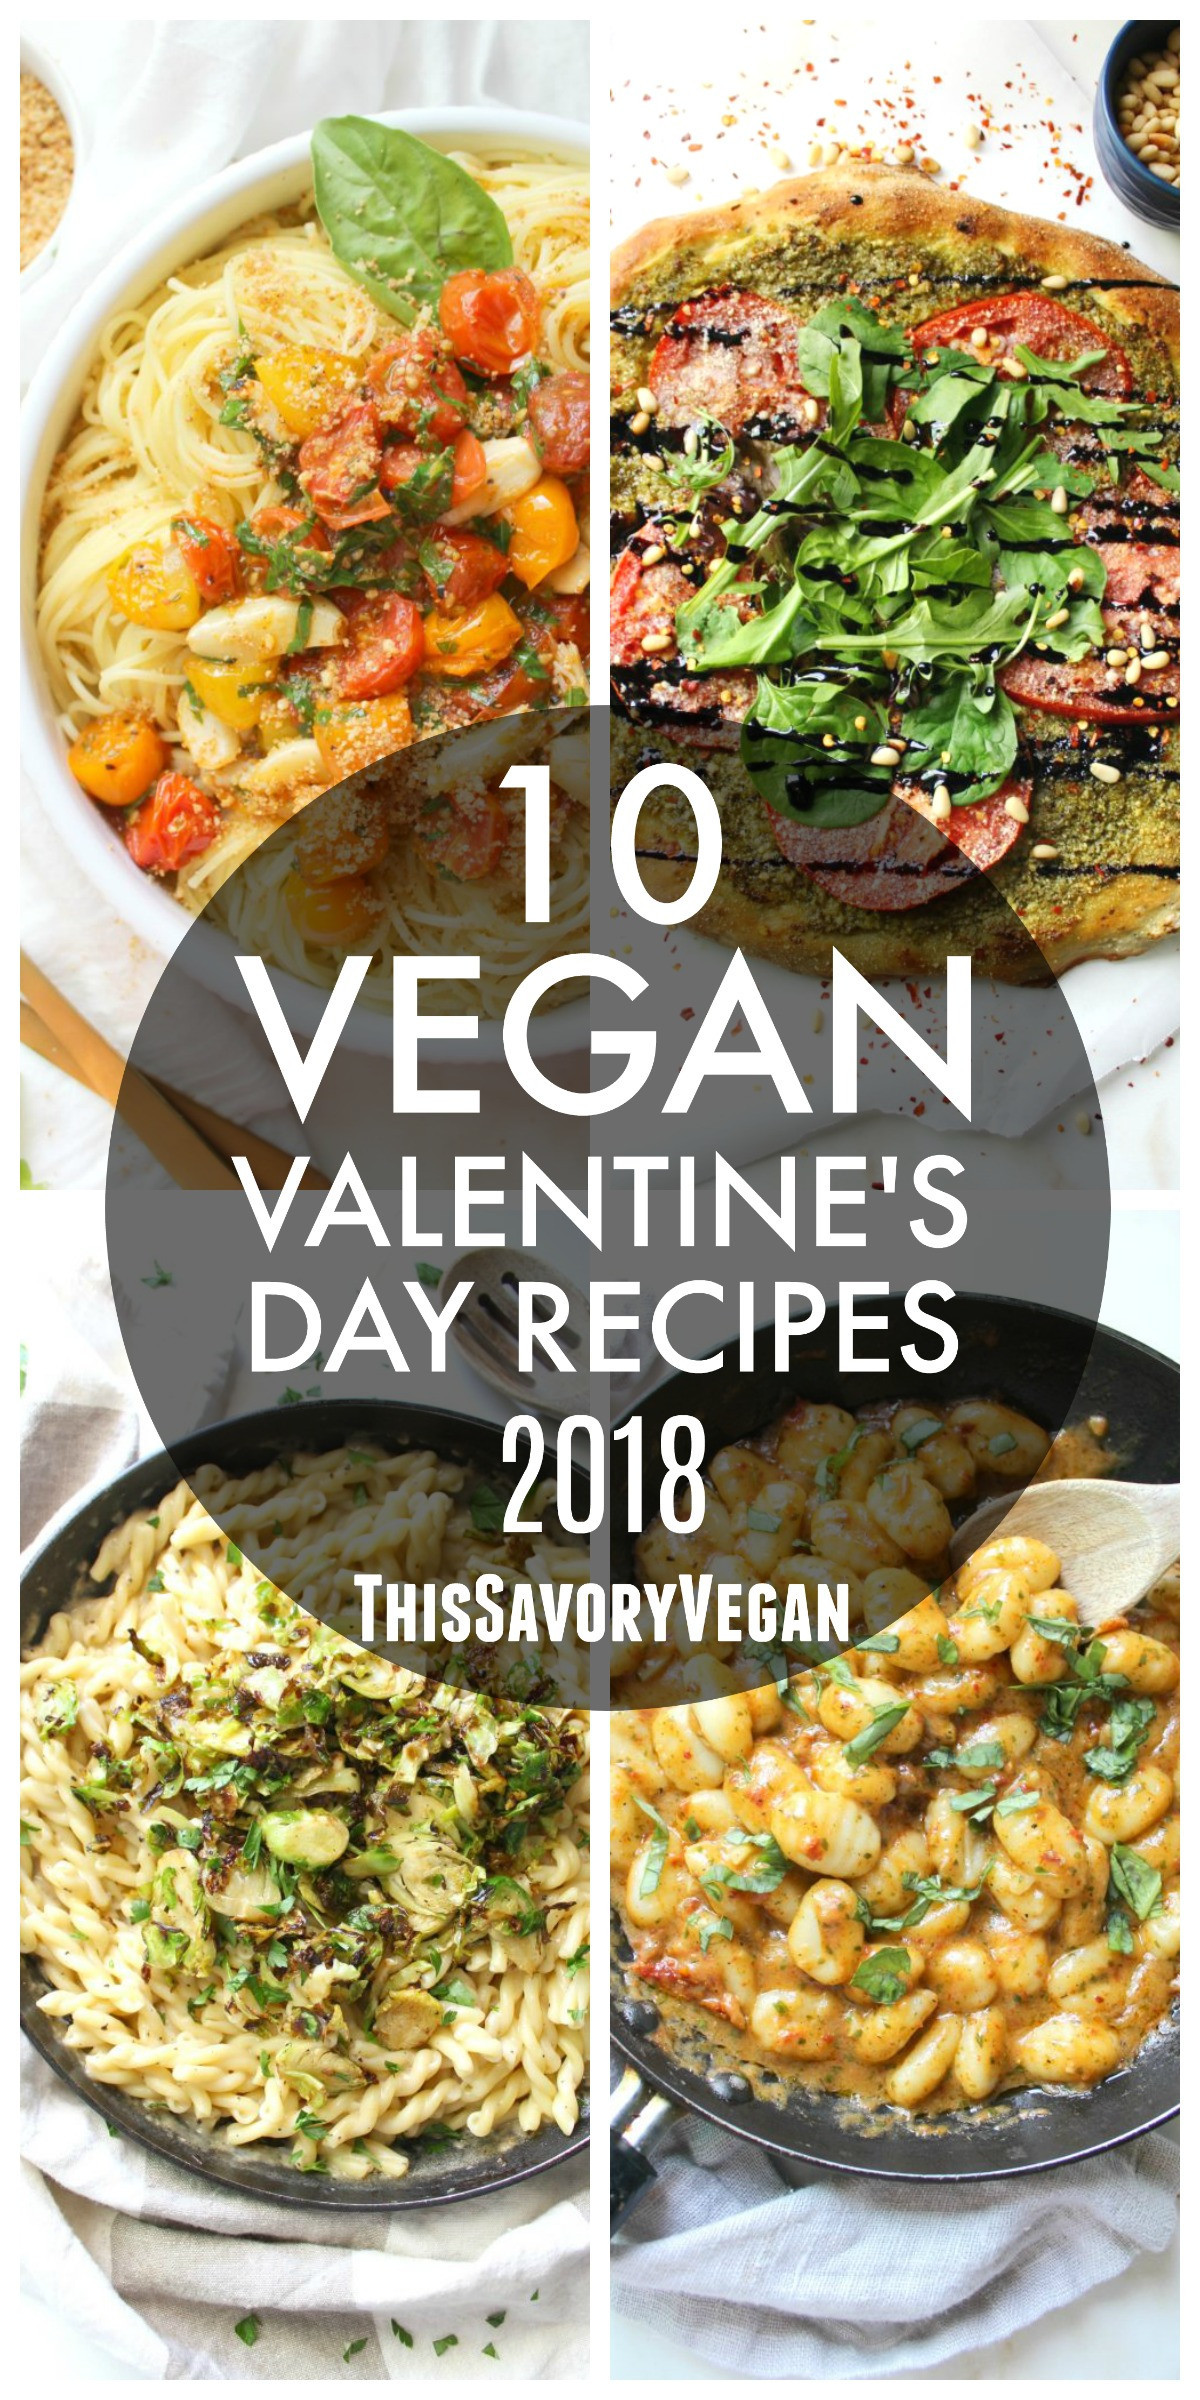 Vegetarian Valentines Recipes
 The Best Ve arian Valentines Recipes Best Round Up